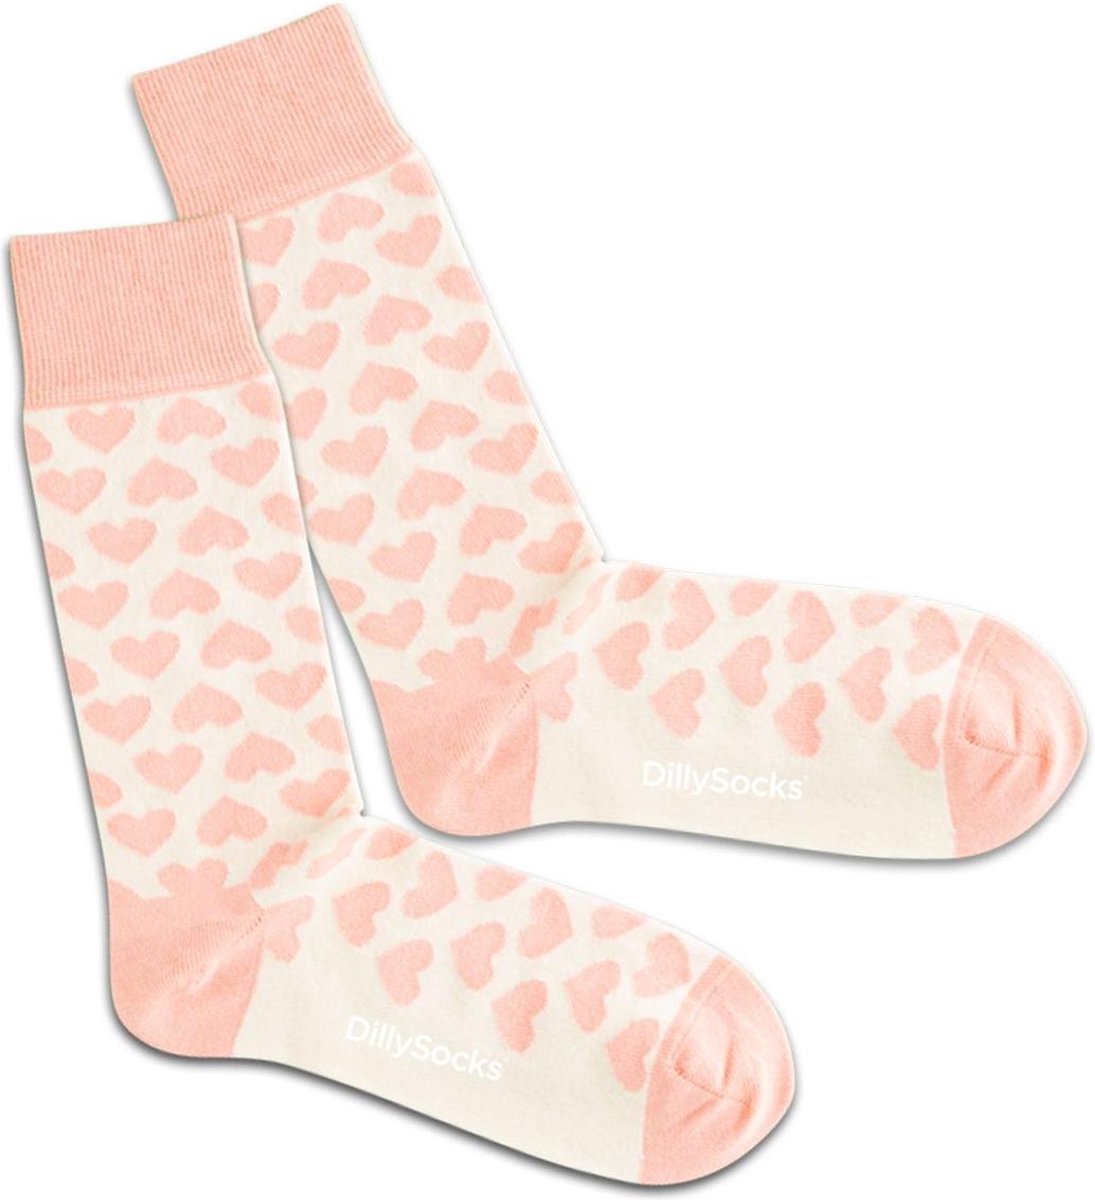 Dilly socks True Romance Sock maat 36-40